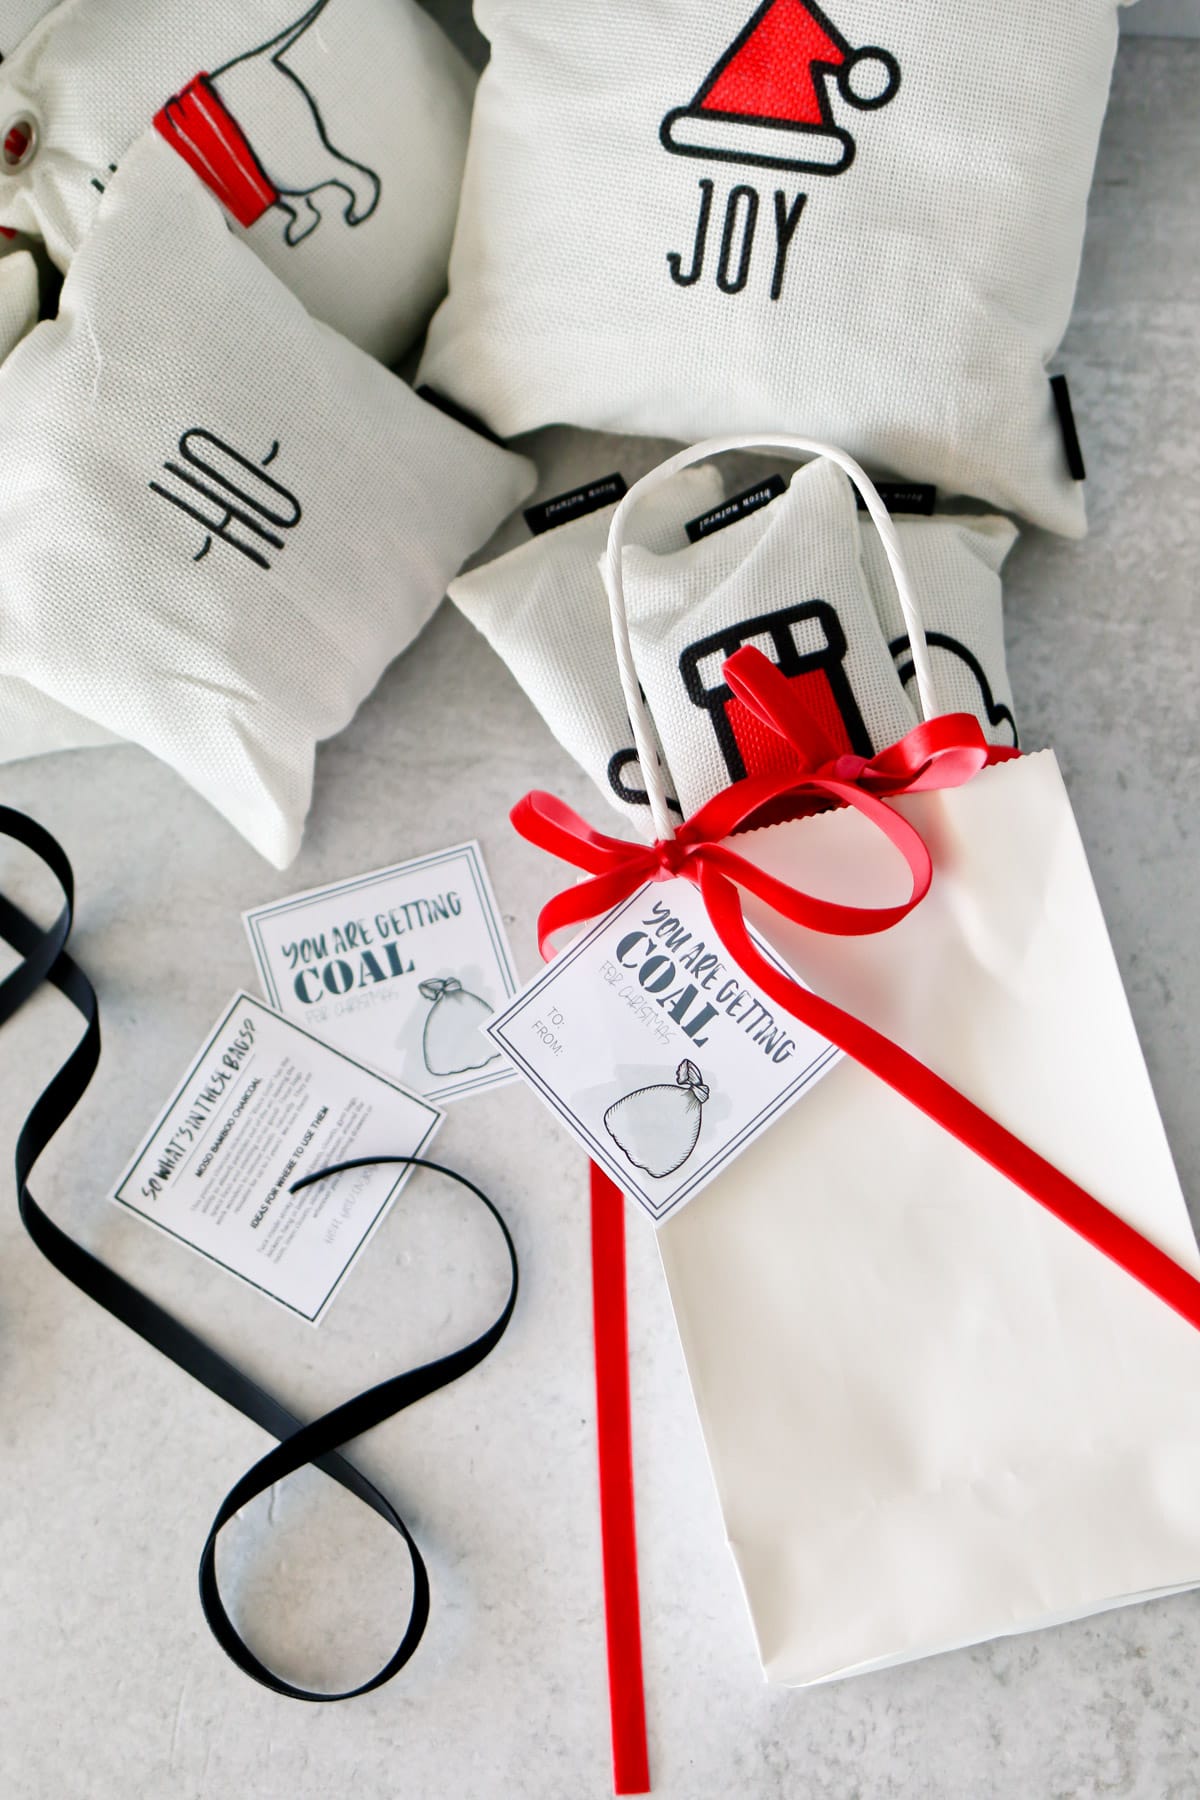 You are getting coal for Christmas, FREE printable gift tags on white christmas sock bags